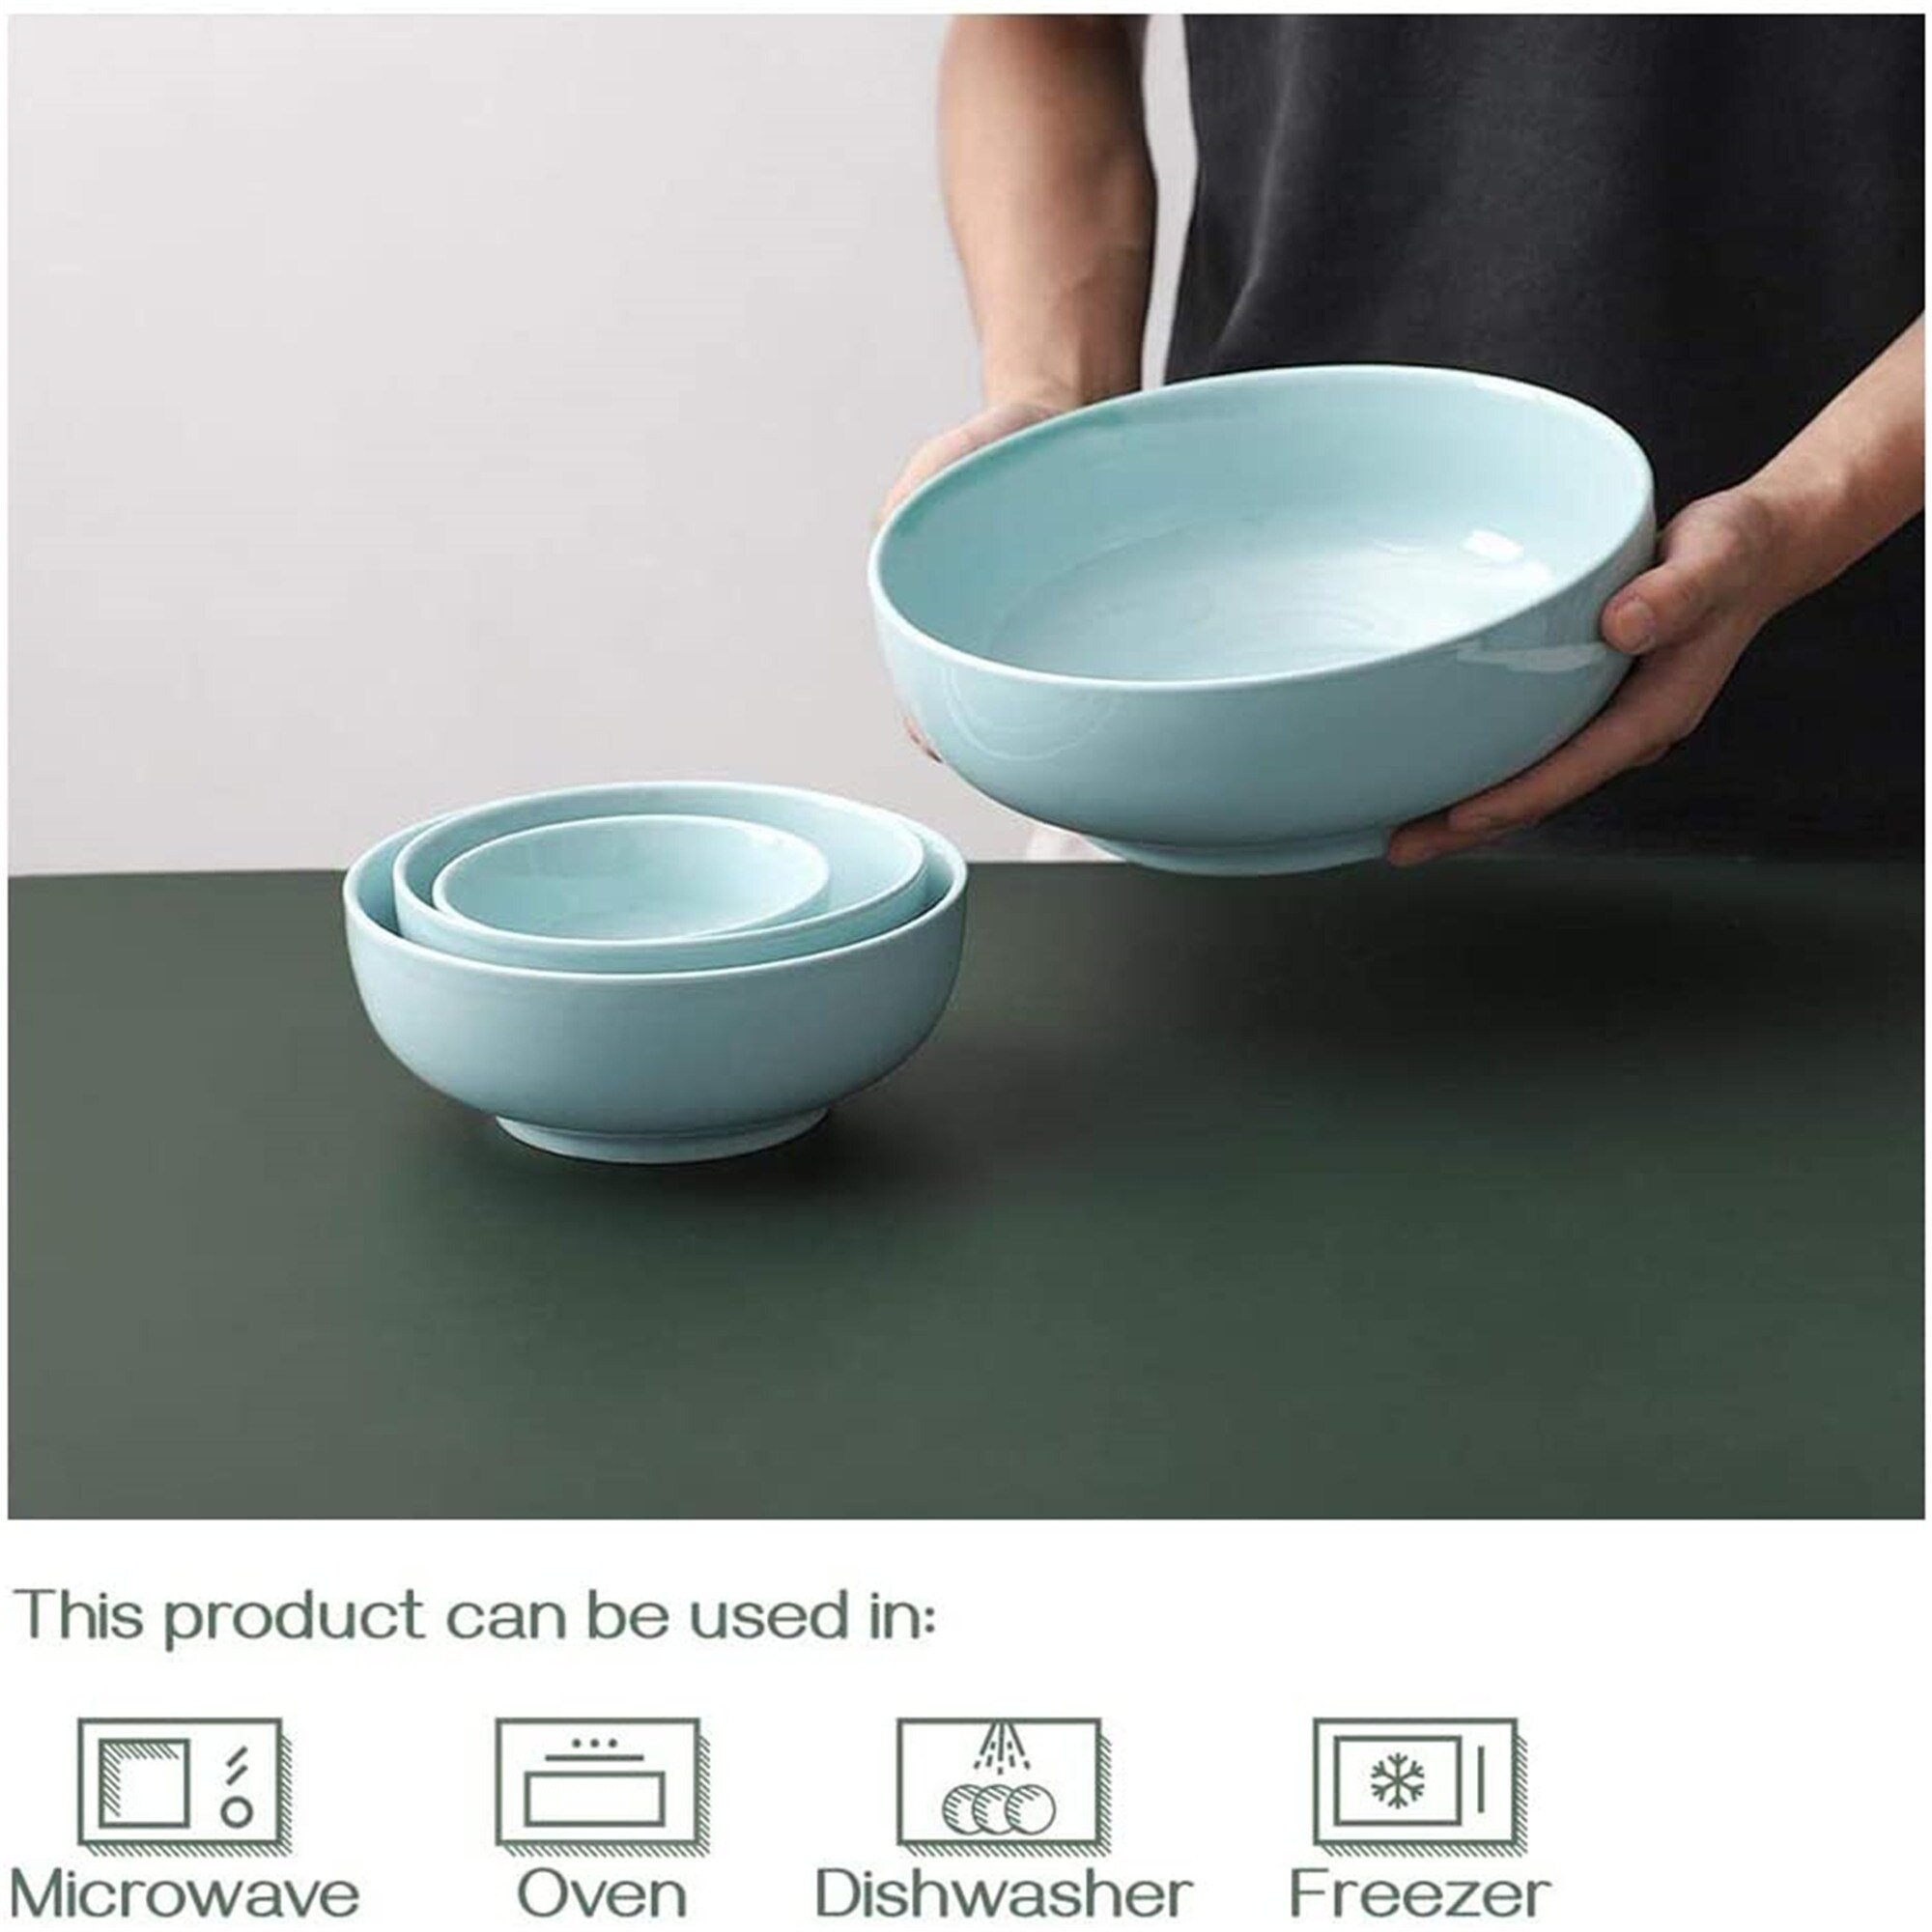 https://ak1.ostkcdn.com/images/products/is/images/direct/ec4d14e8387aea7cde0f51080c90b2753179295c/Serving-Bowl-Porcelain%2C-Ceramic-Mixing-Bowl%2C-86-36-24-8.5-Ounces-Nesting-Bowls-for-kitchen%2C-Salad-Bowl-Set-of-4.jpg